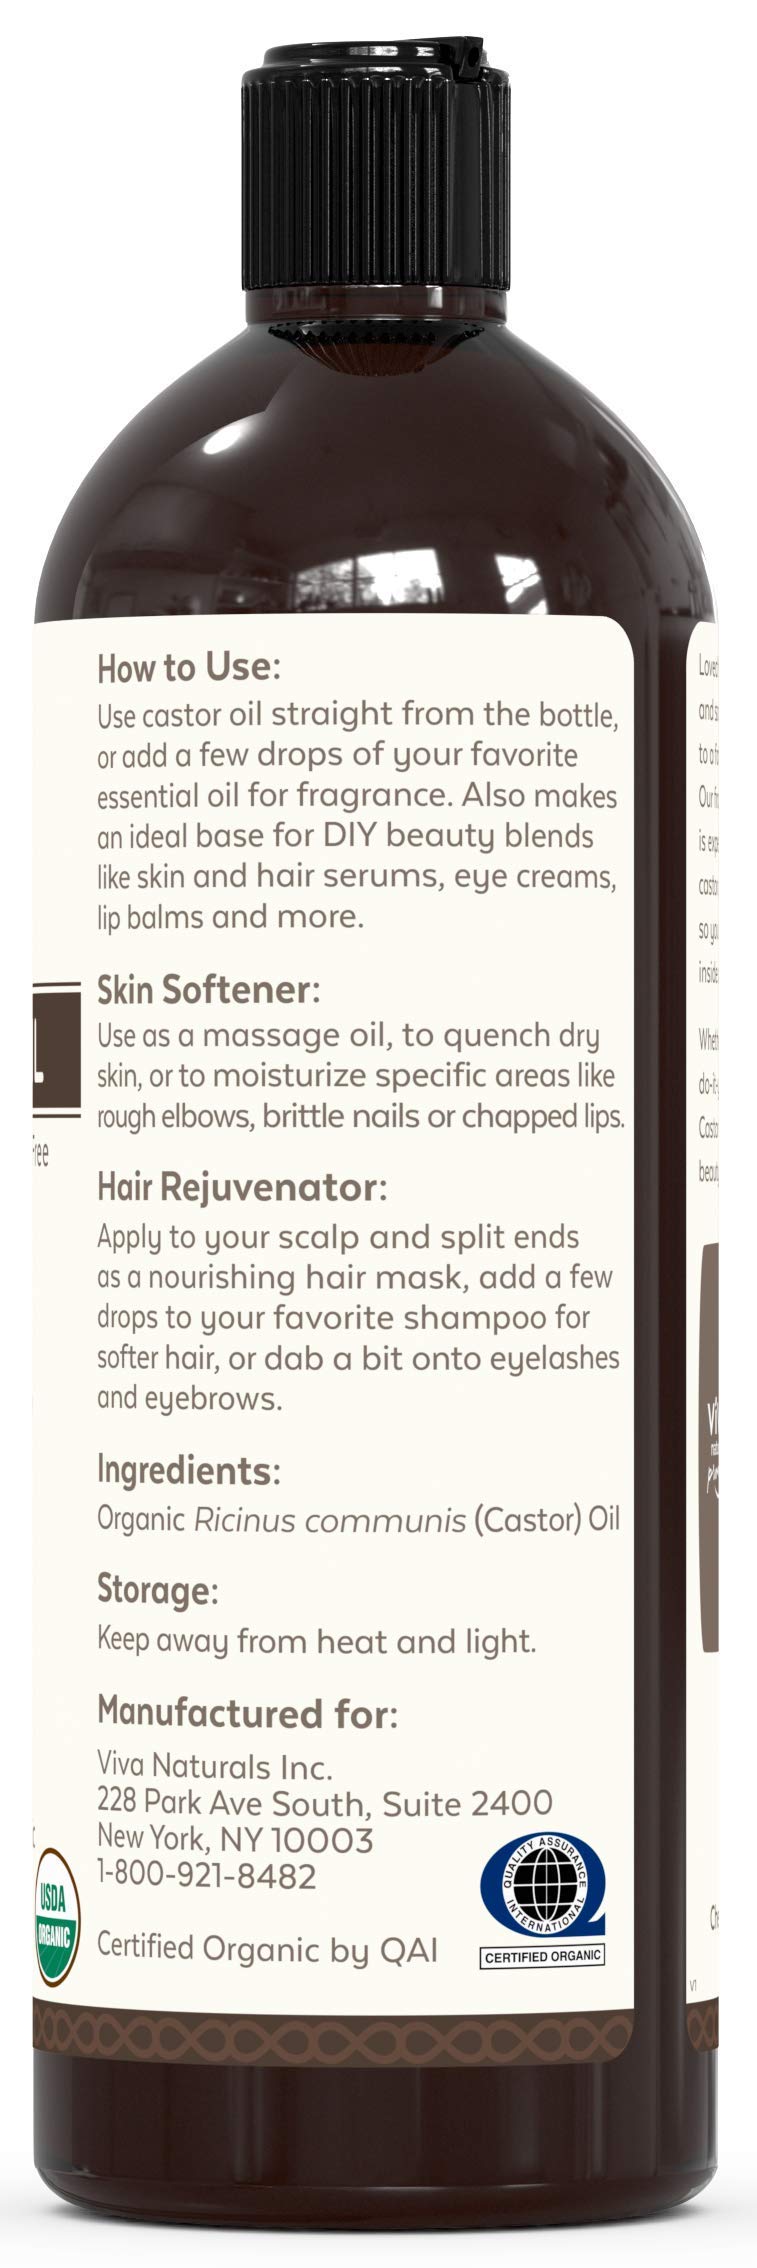 [Australia] - Organic Castor Oil for Eyelashes and Eyebrows (16 fl oz) - USDA Certified Organic, Cold Pressed Castor Oil, Natural Hair Oil & Eyelash Serum, Beauty Kit Included 